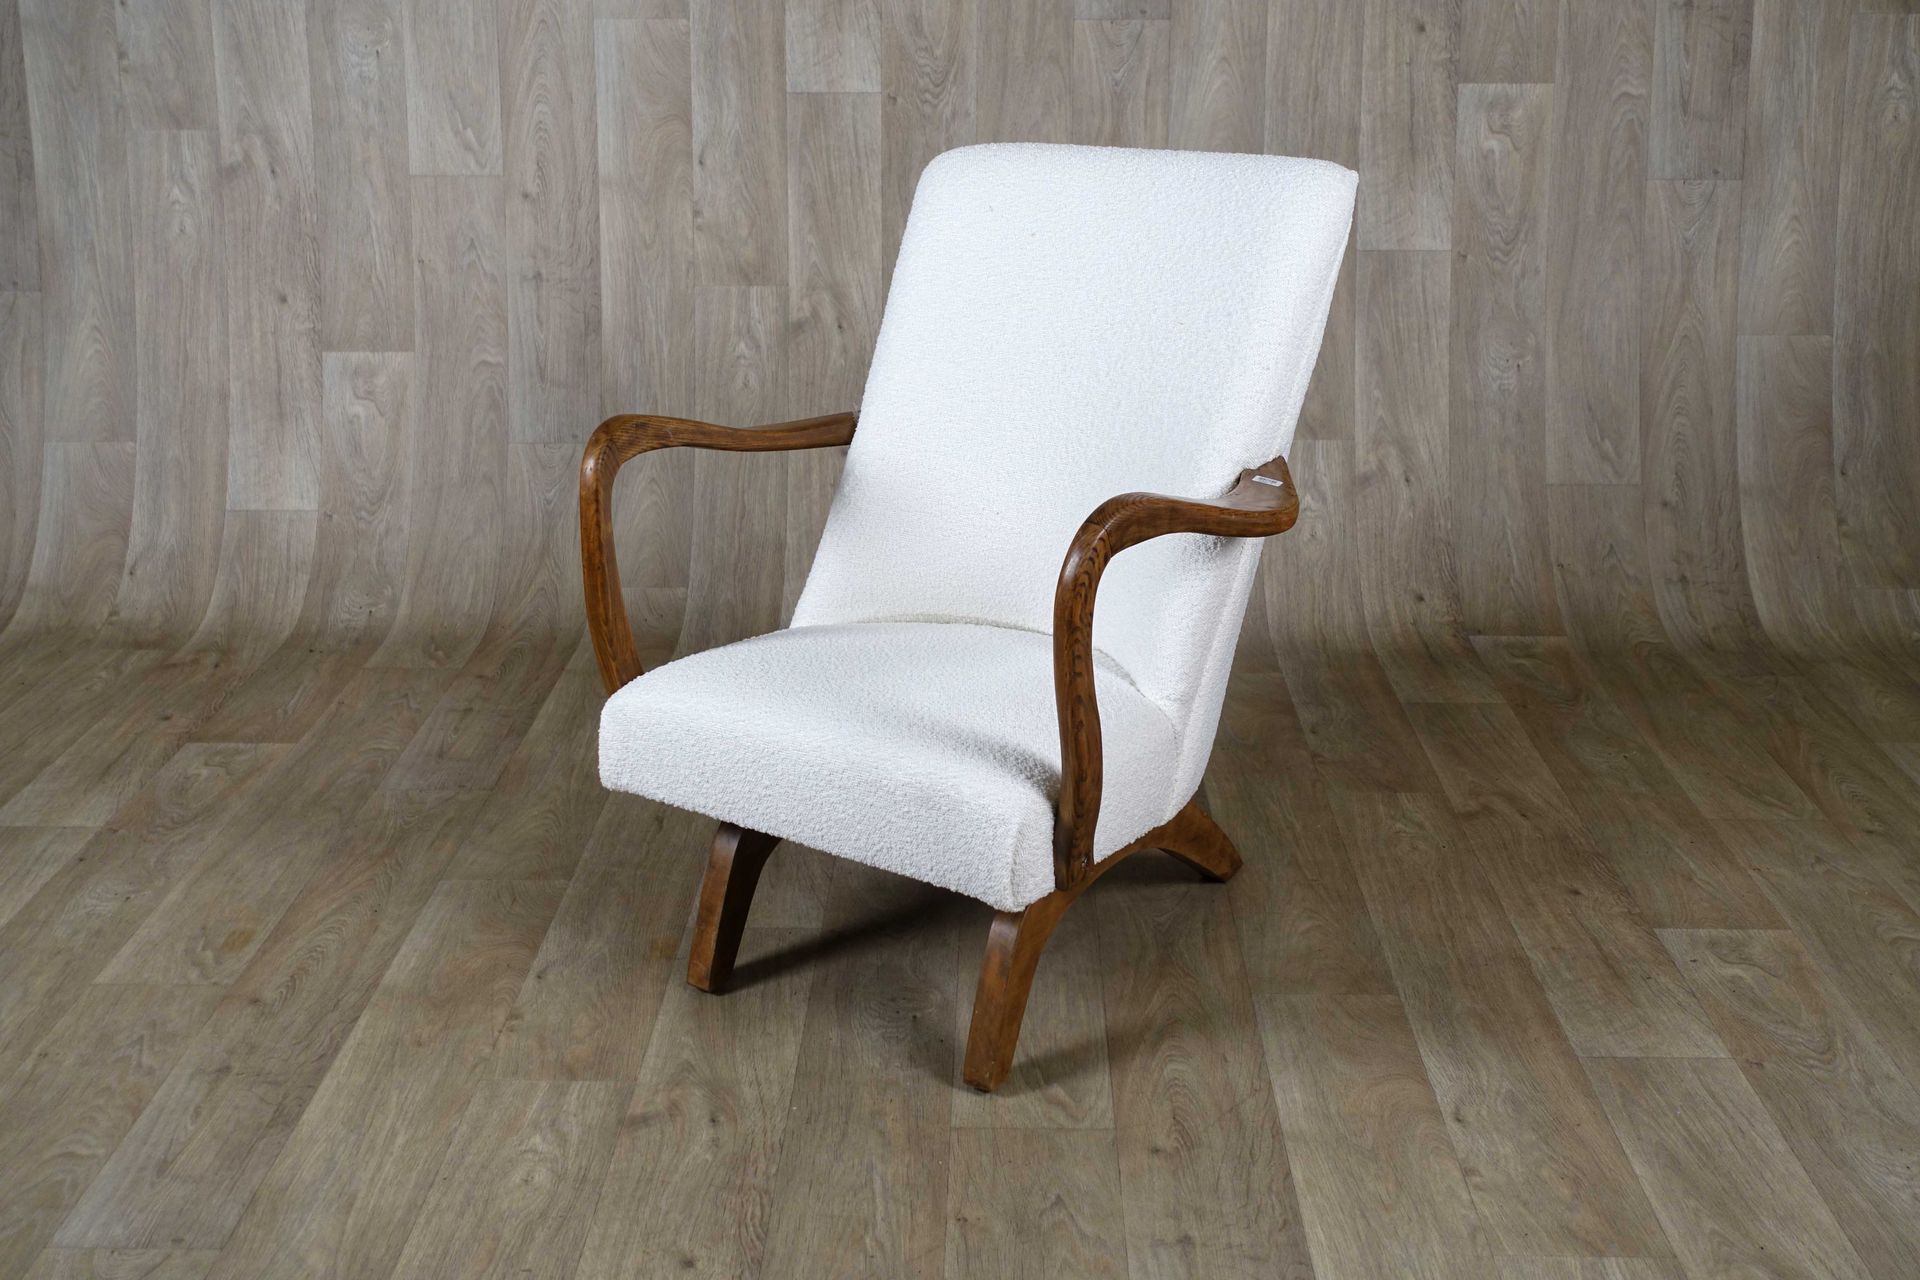 Fauteuil-berceuse. 躺着的座椅和蜿蜒的扶手。腿上有支架。榆木材质的软垫，采用白色织物。50年代/60年代的作品。